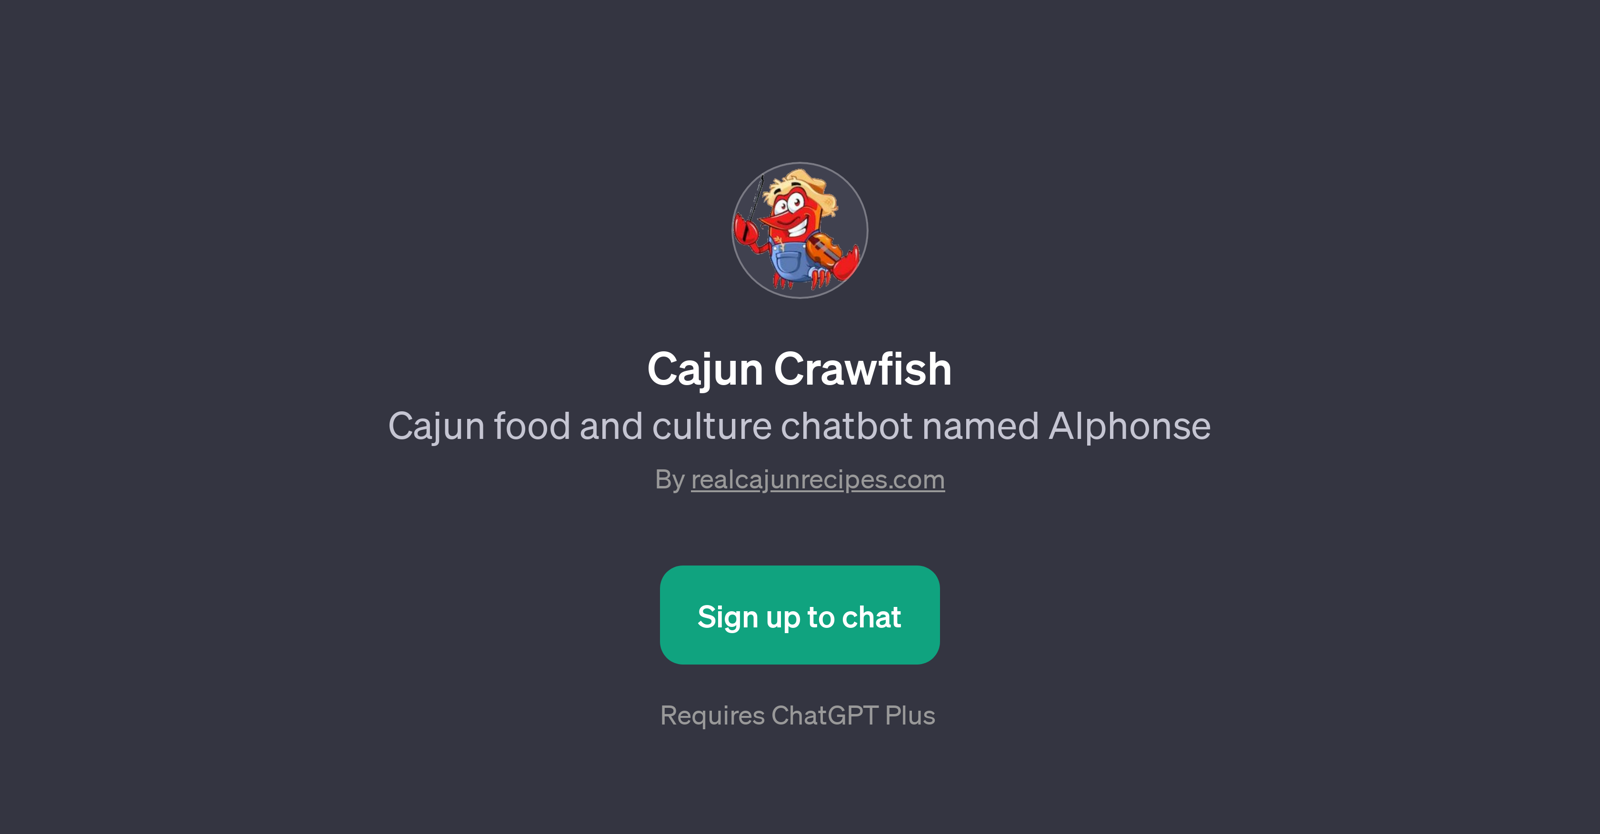 Cajun Crawfish website